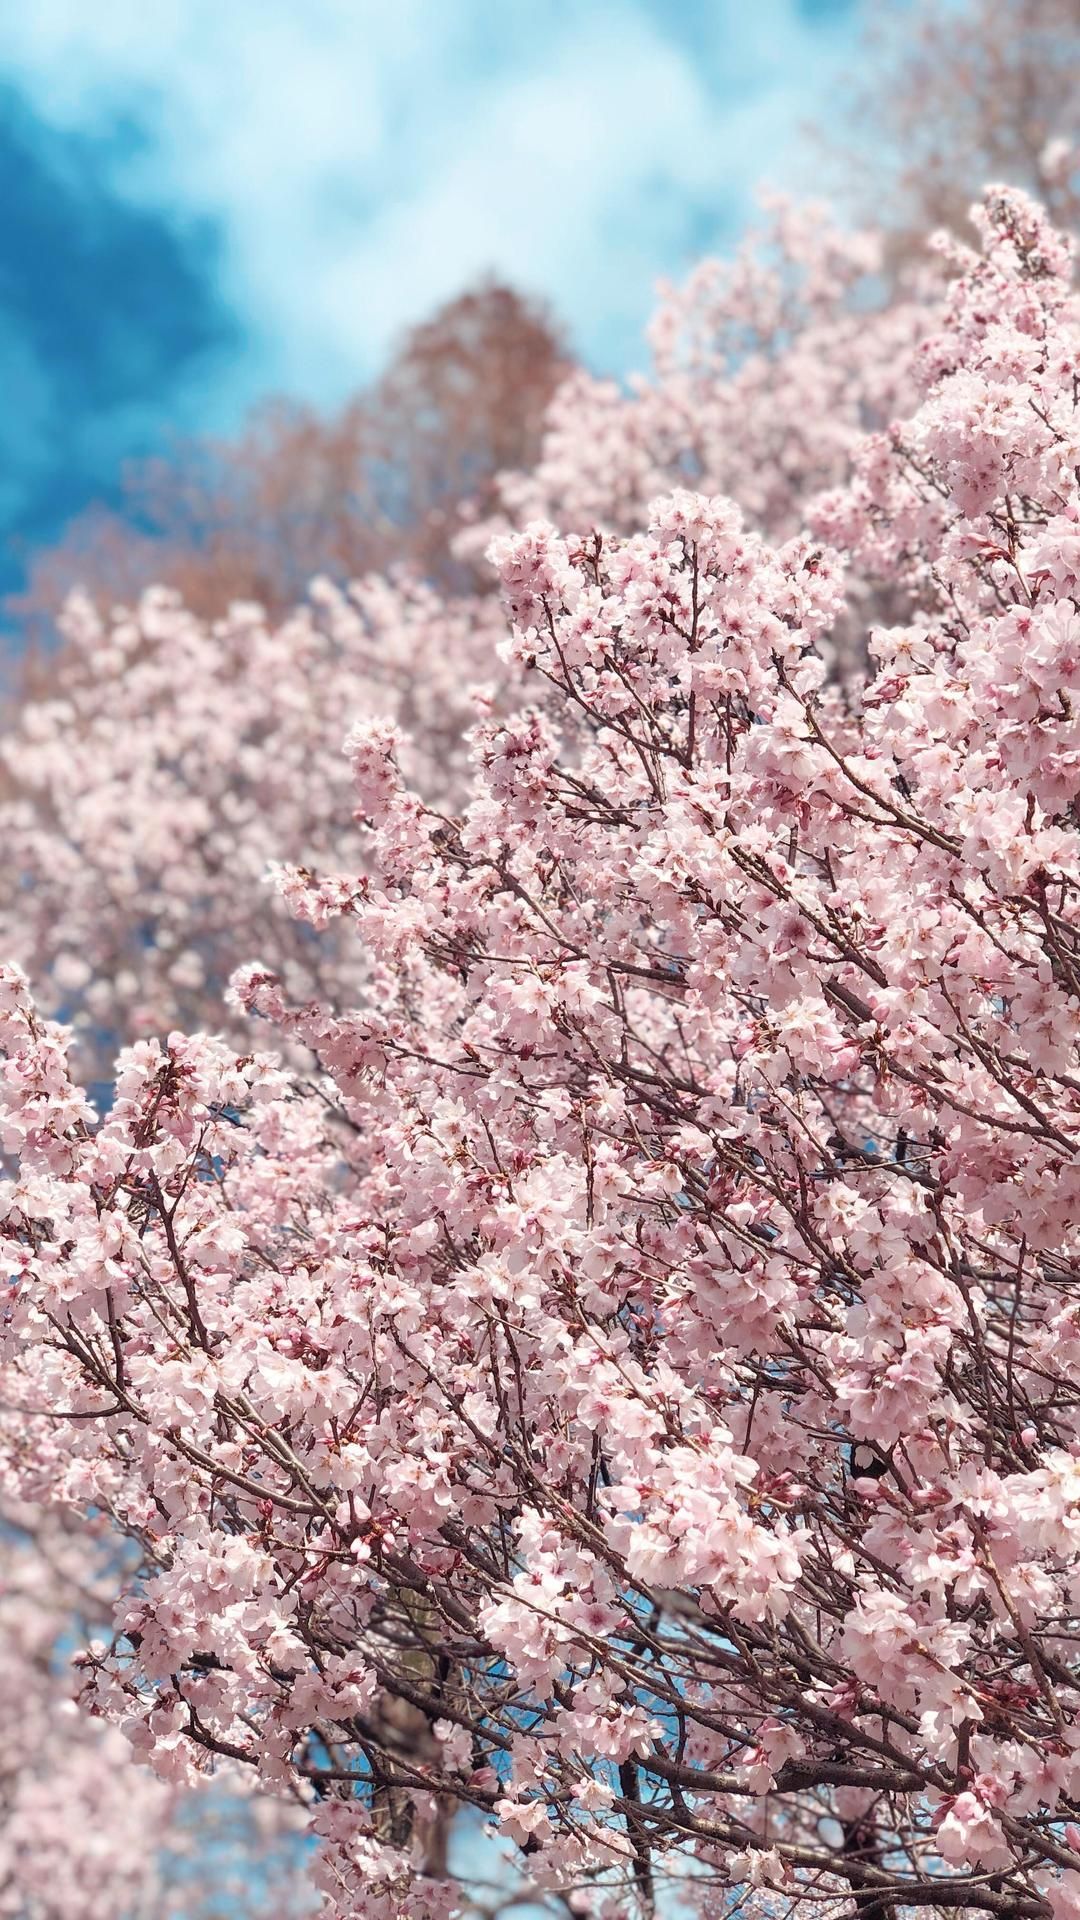 Cherry blossom in full bloom  | Dawn/ View | Pinterest | Cherry ...